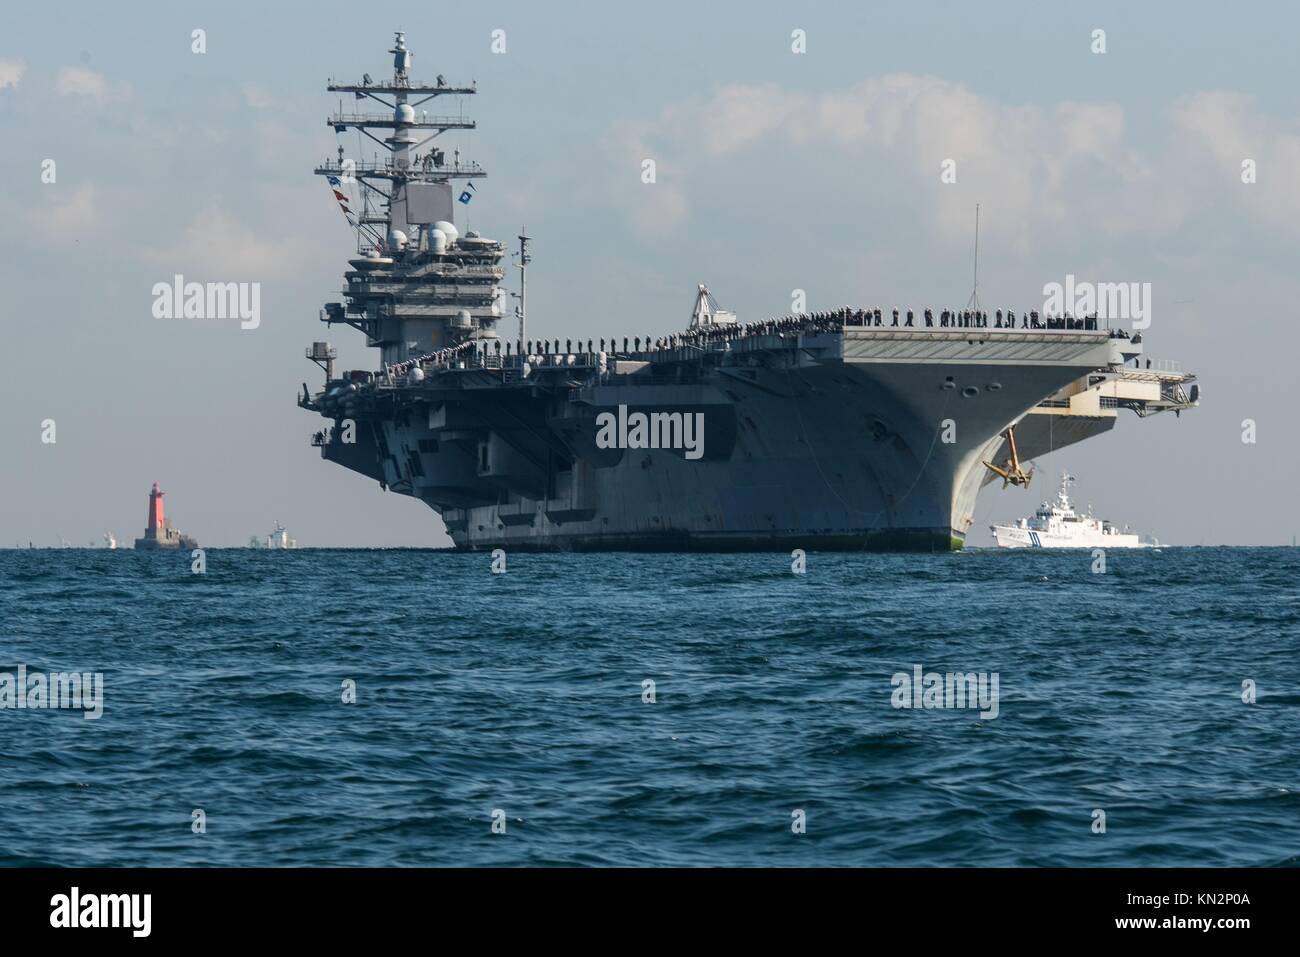 U.S. Navy sailors man the rails as the U.S. Navy Nimitz-class aircraft carrier USS Ronald Reagan arrives at Fleet Activities Yokosuka December 4, 2017 in Yokosuka, Japan.  (photo by Janweb B. Lagazo via Planetpix) Stock Photo